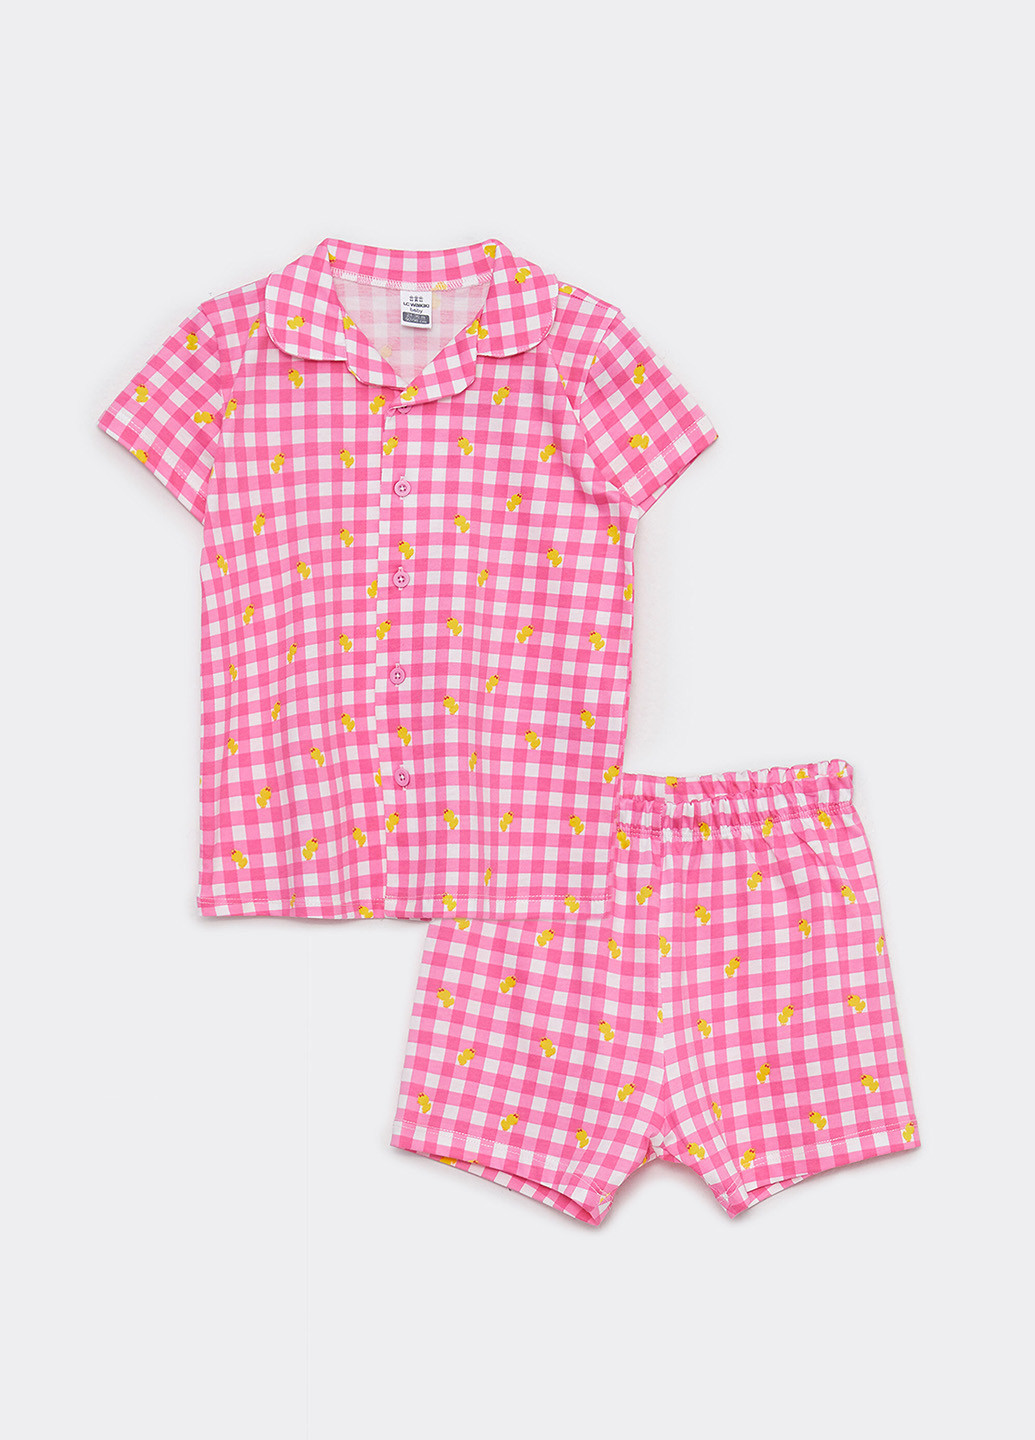 Розовая всесезон пижама (рубашка, шорты) рубашка + шорты LC Waikiki